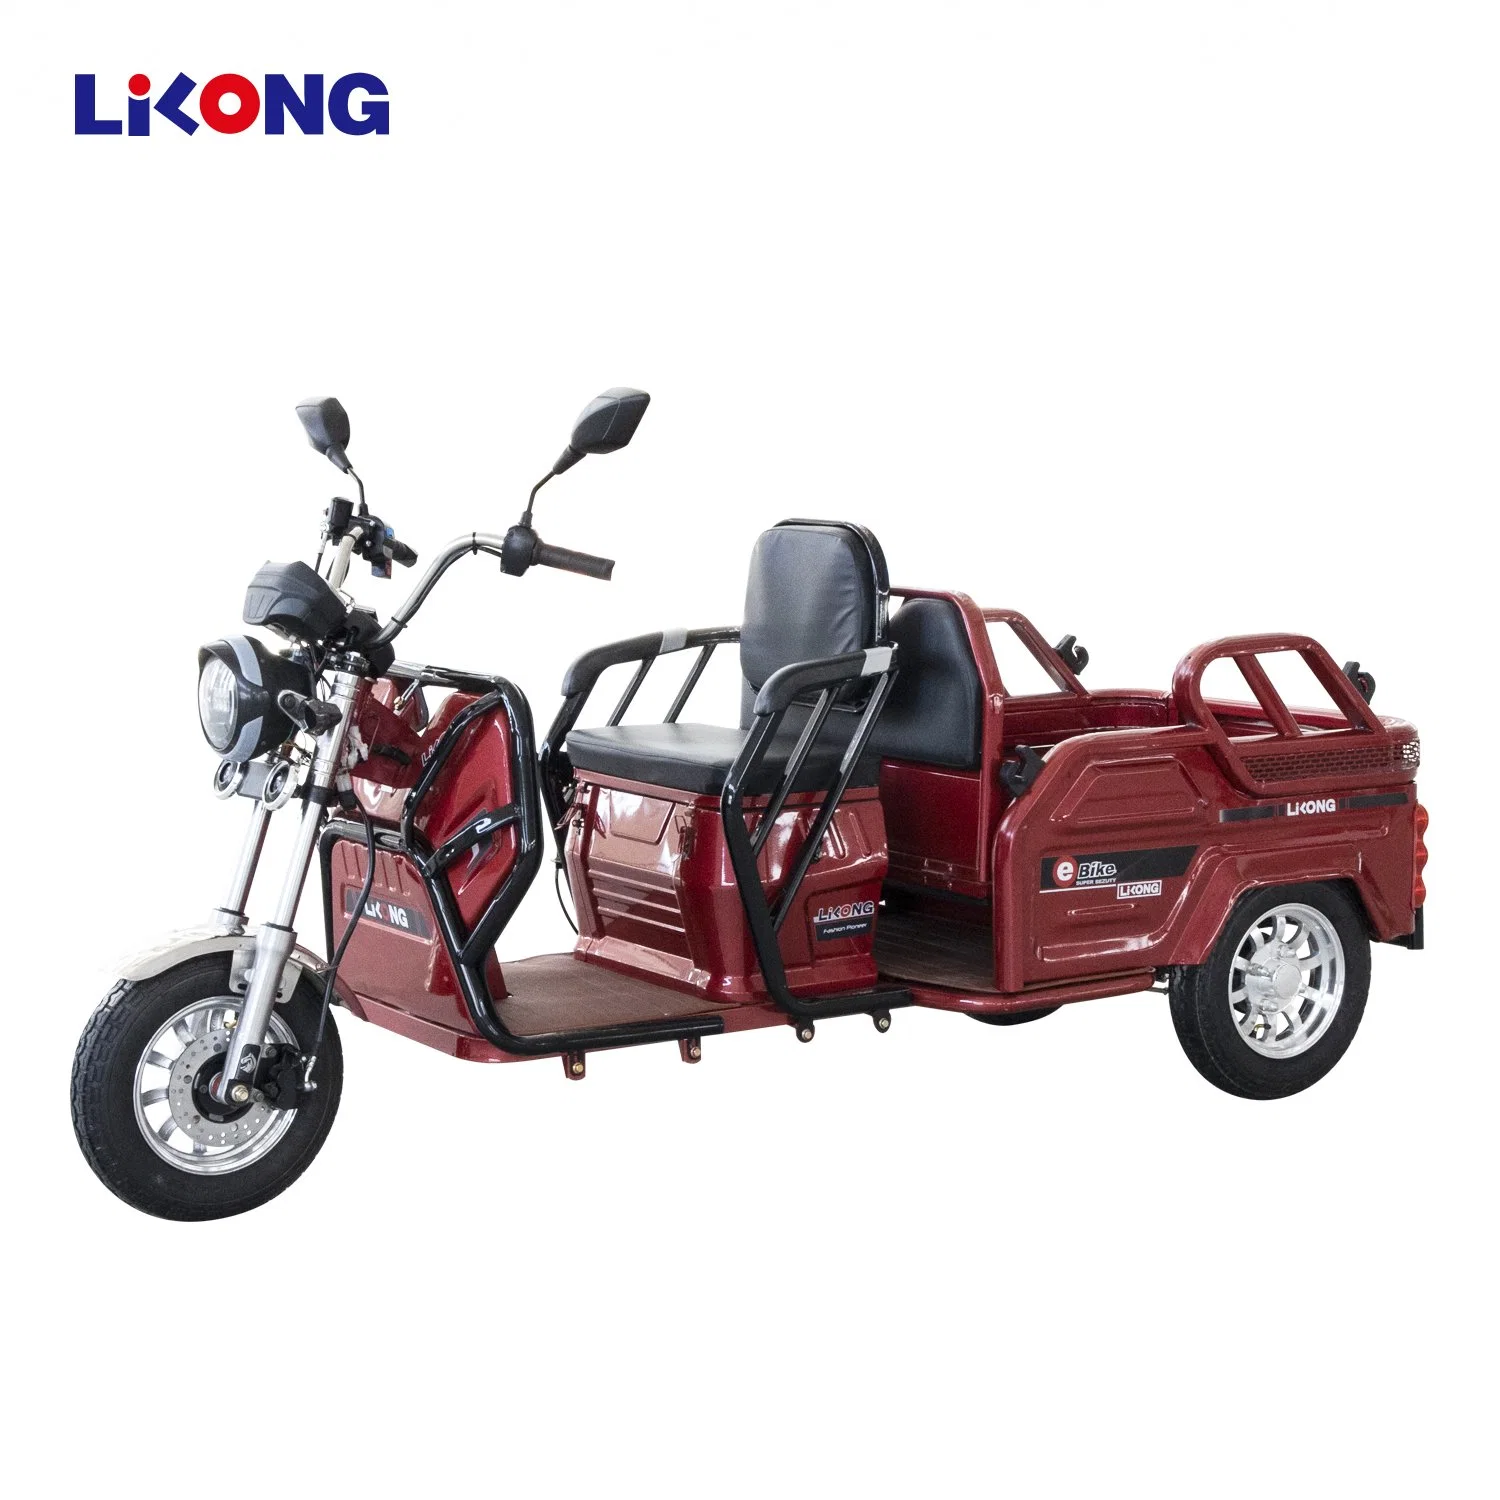 Lilong descuento Multiuso de pasajeros y carga E-bici triciclo